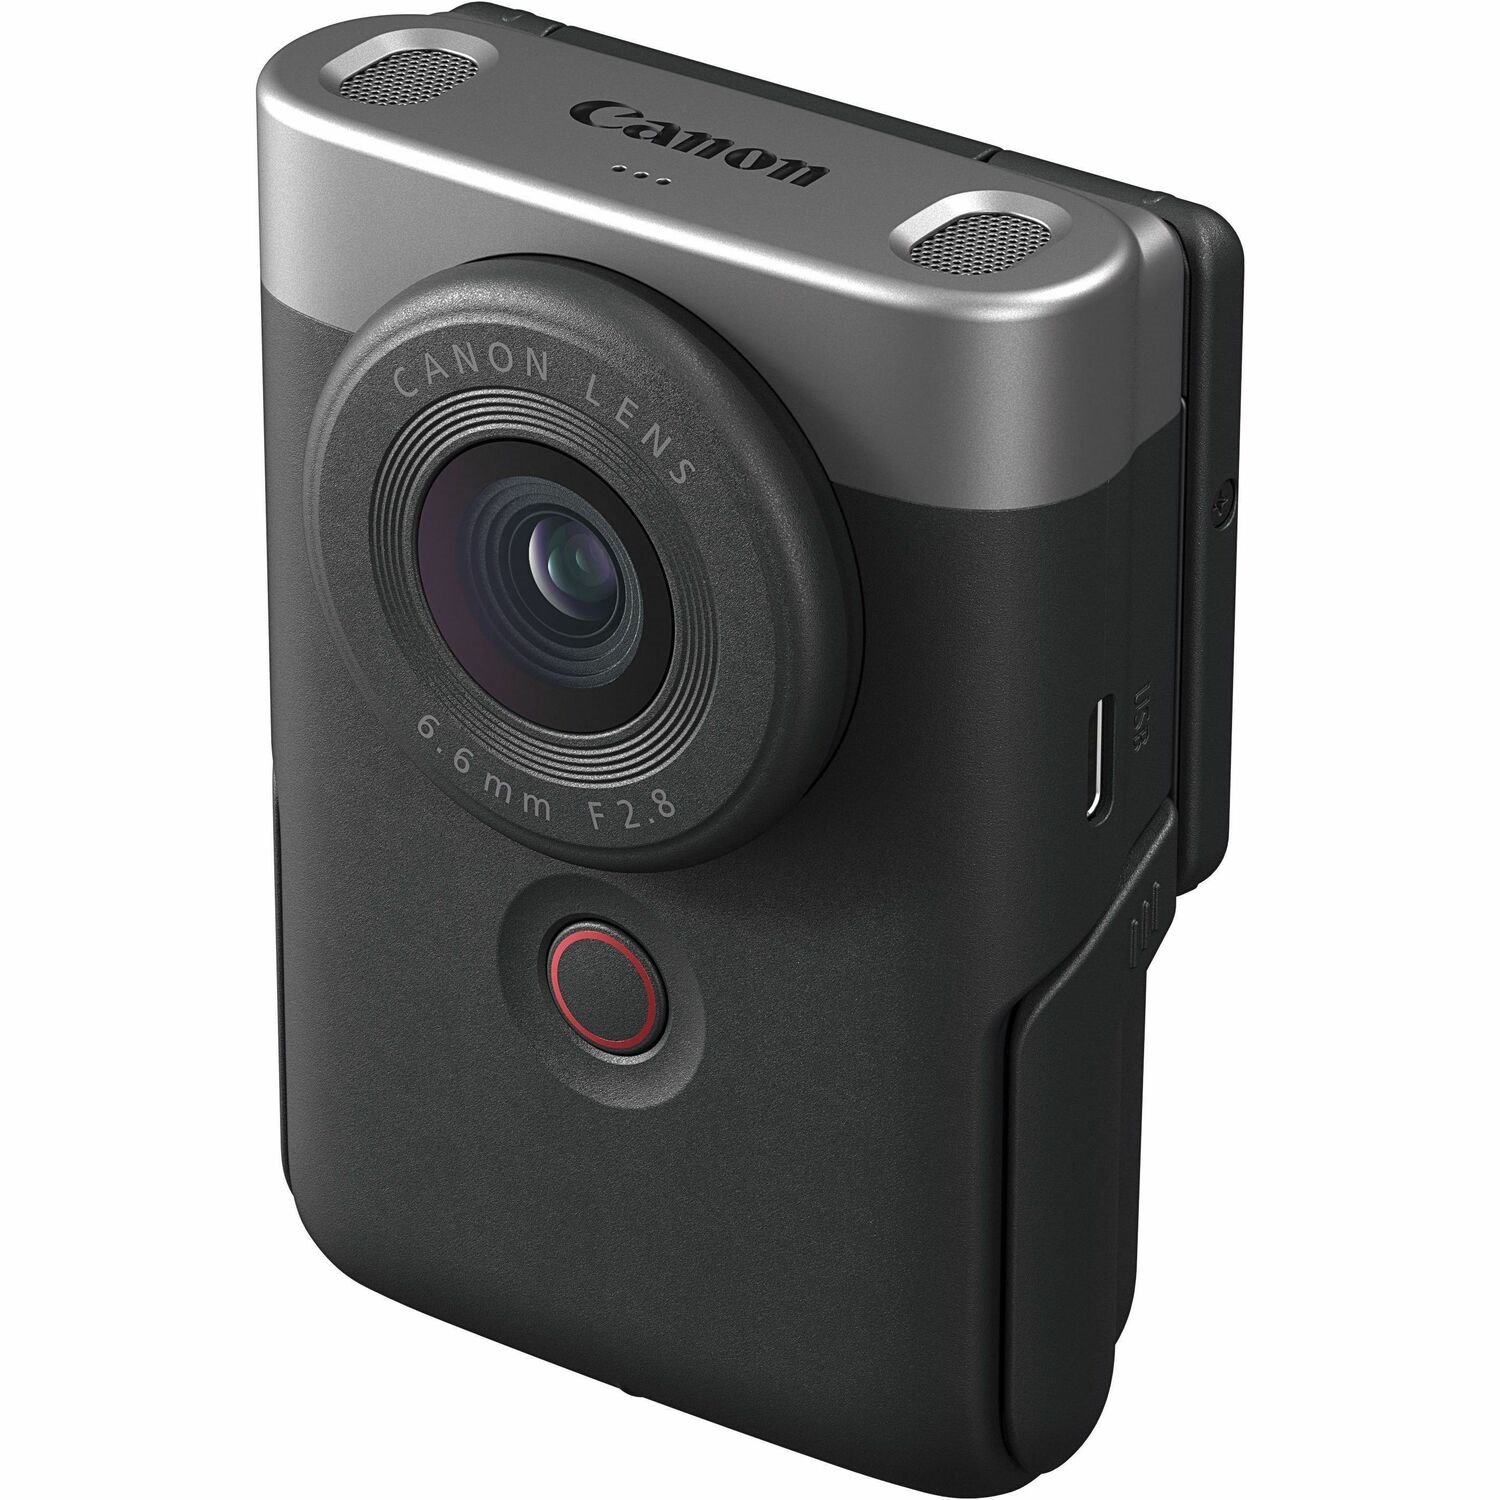 Canon PowerShot V10 15.2 Megapixel Compact Camera - Silver